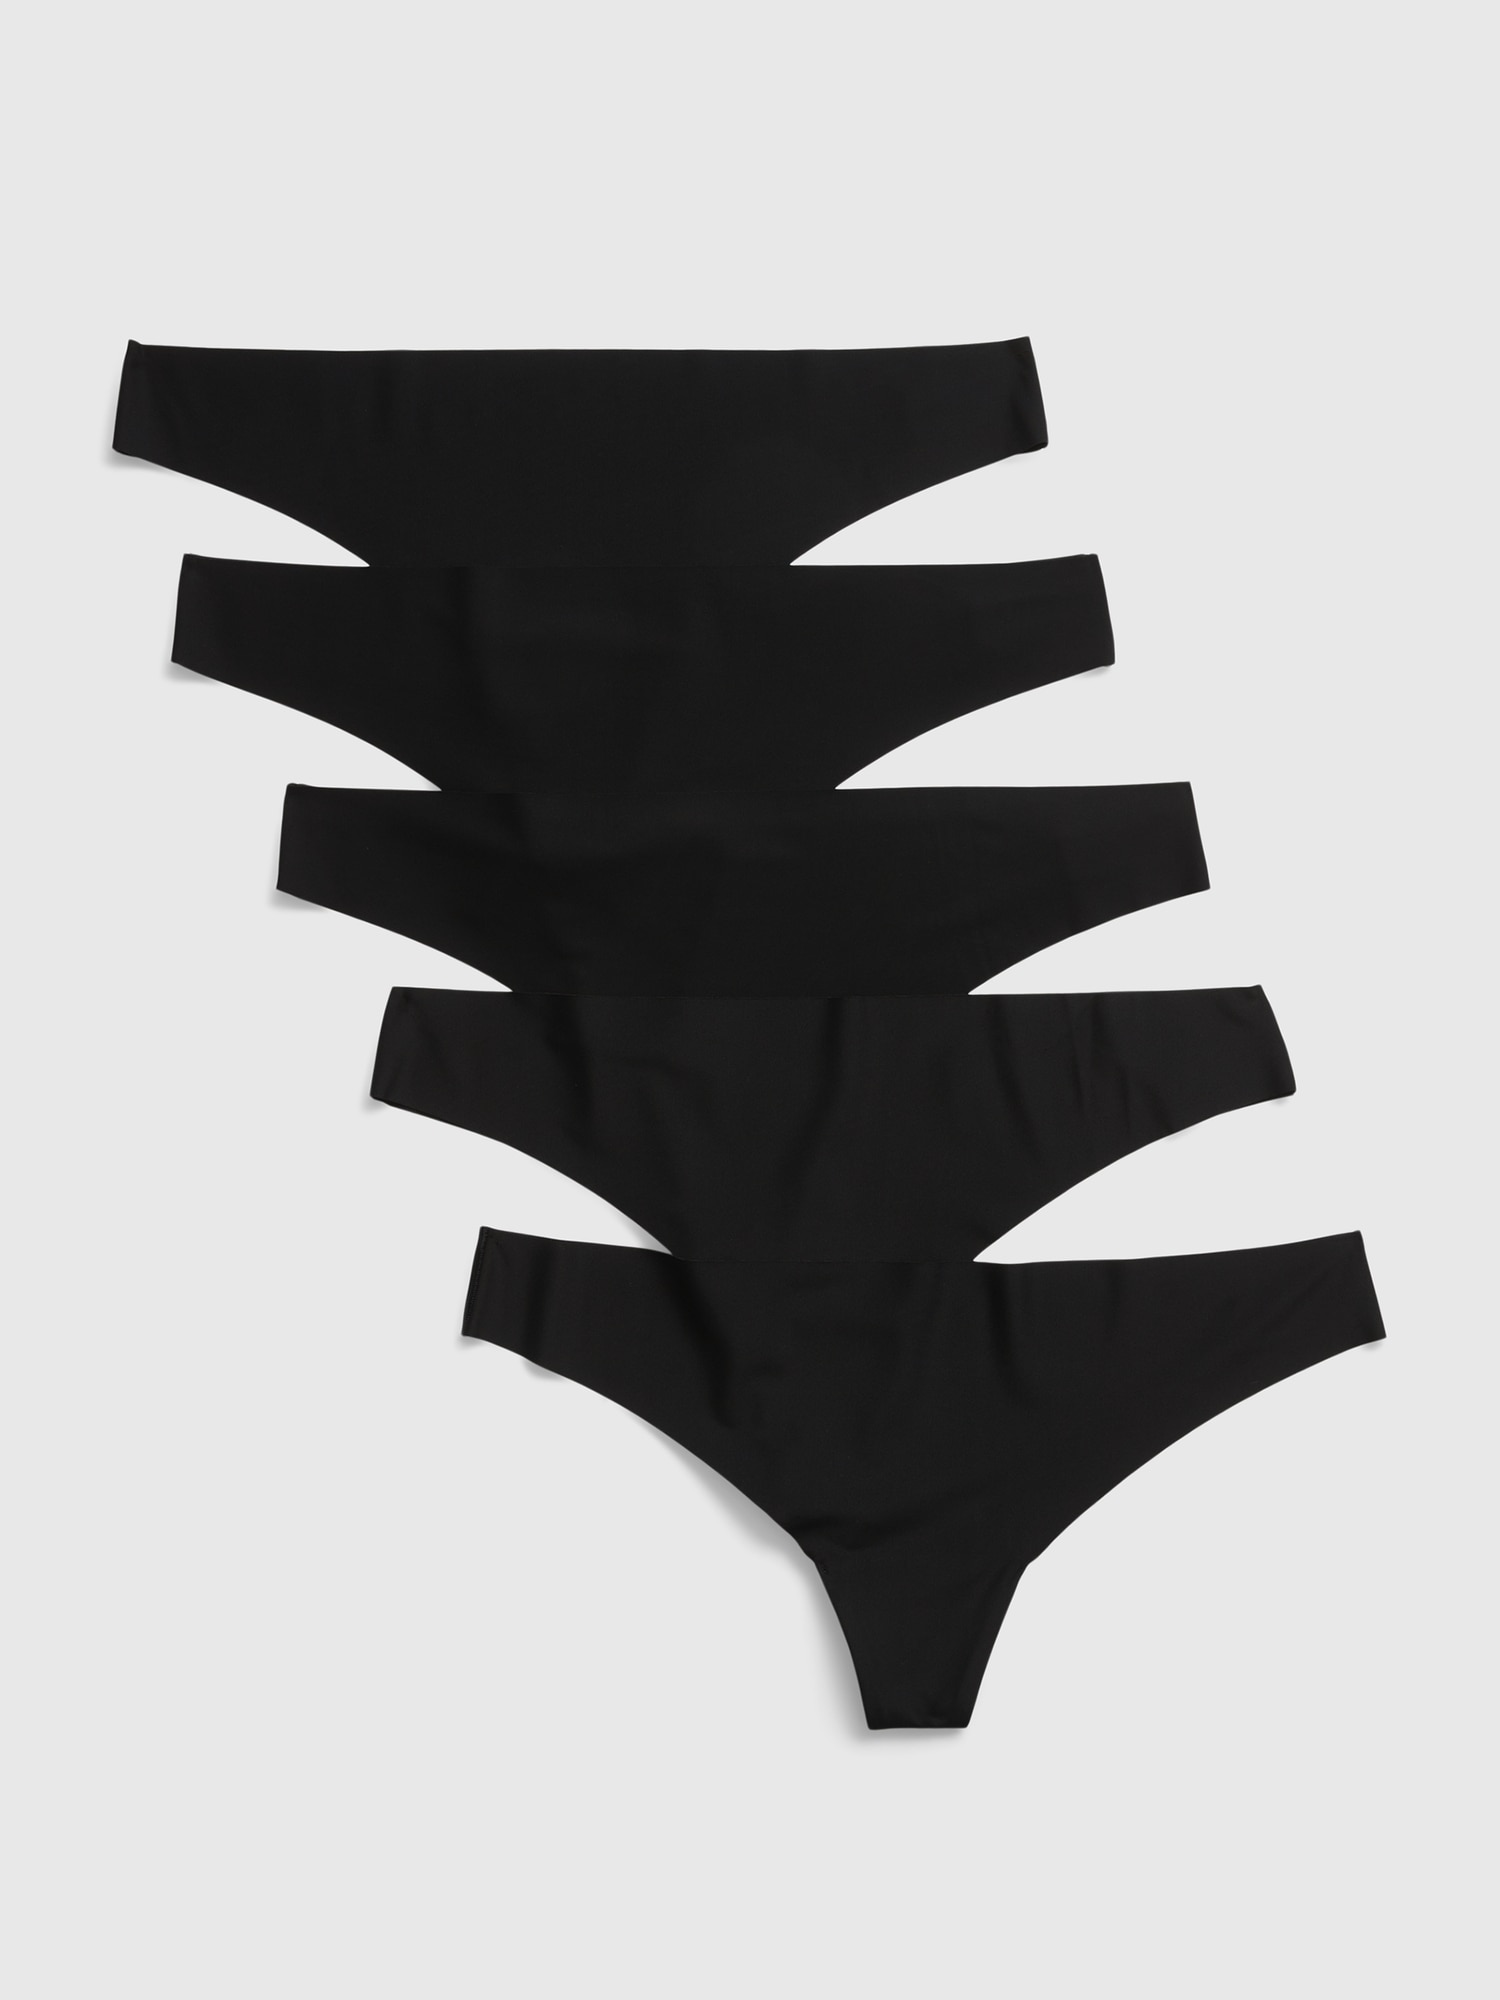 GKICG Thongs for Women Pack, No Show Underwear Sexy Seamless